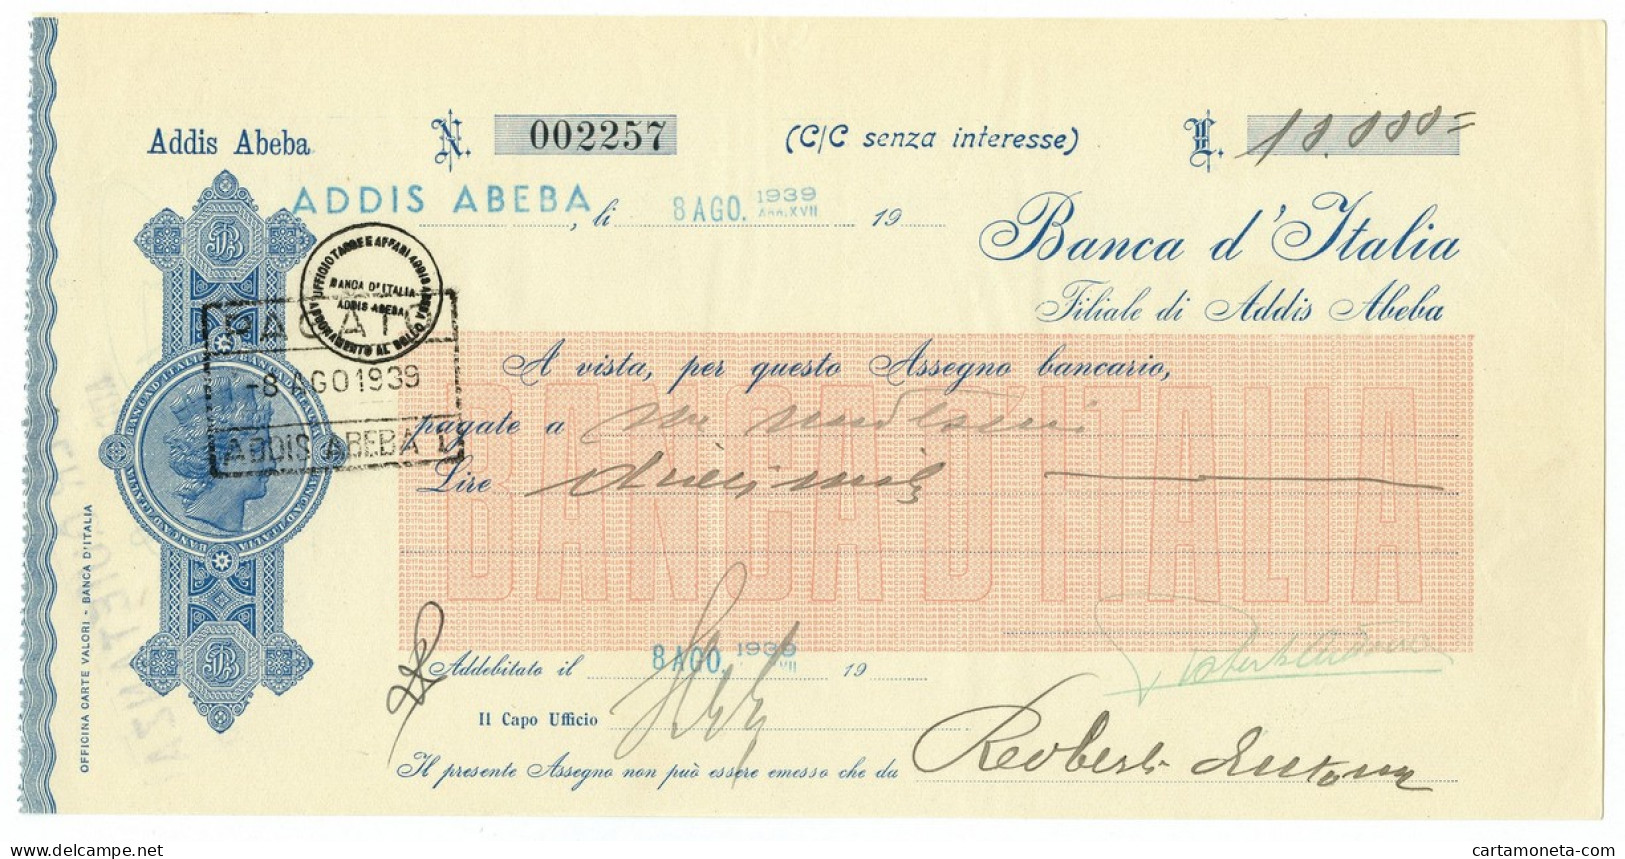 10000 LIRE ASSEGNO BANCA D'ITALIA FILALE ADDIS ABEBA MOD. ROSSO 08/08/1939 SUP - Afrique Orientale Italienne